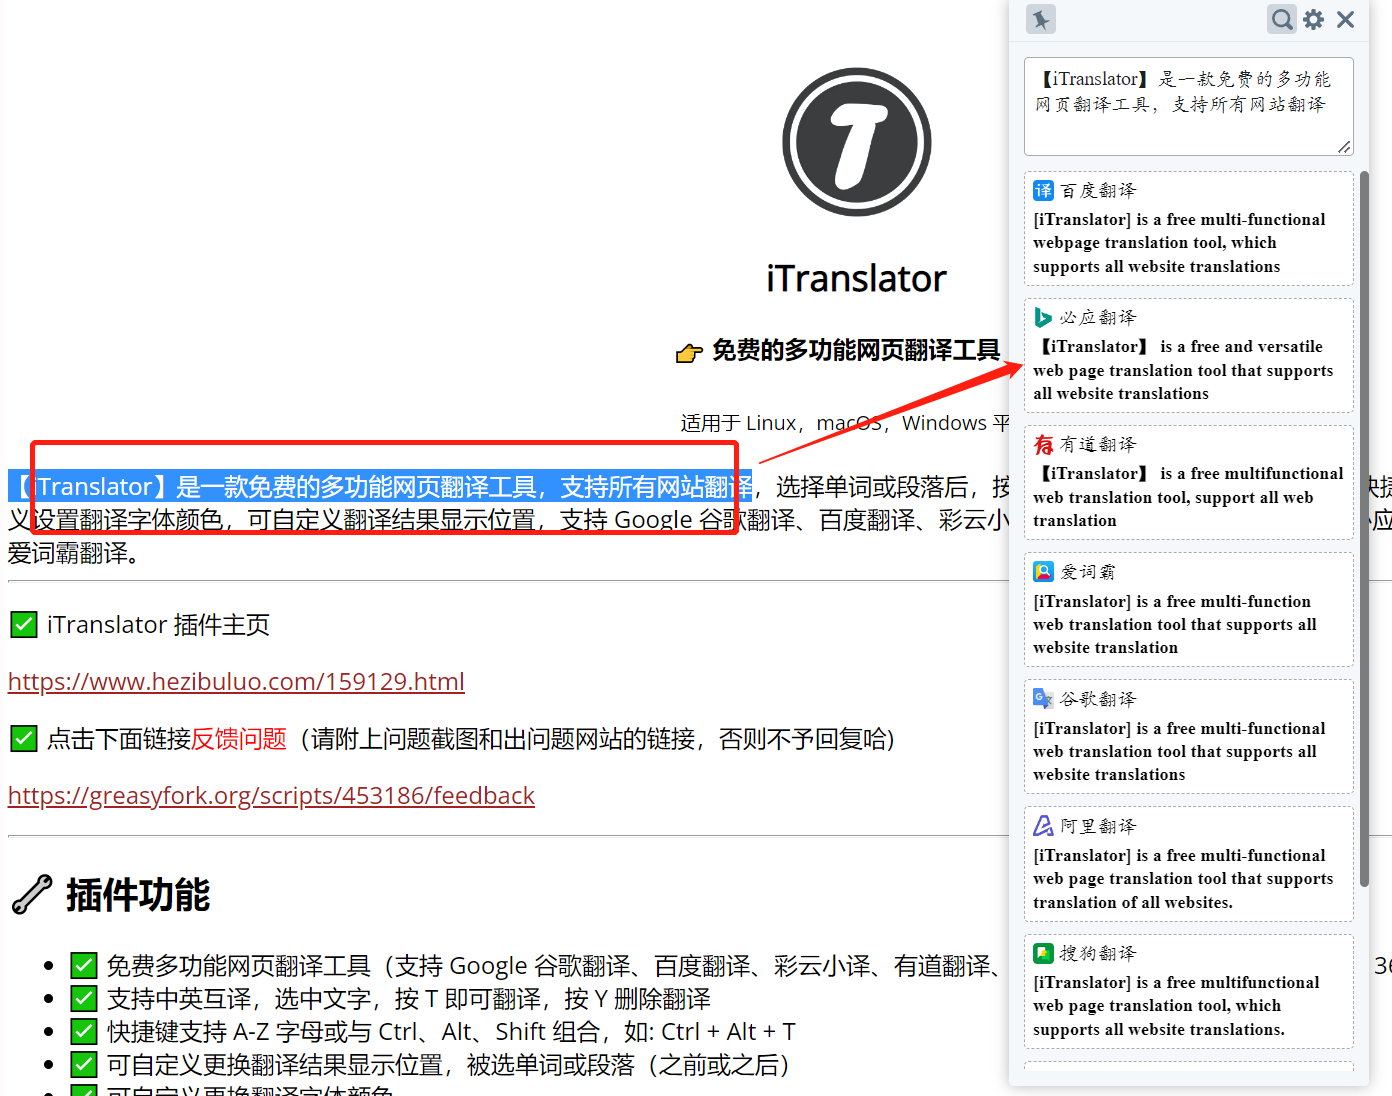 iTranslator 2.0.0 浏览器插件版，免费的多功能网页翻译油猴脚本